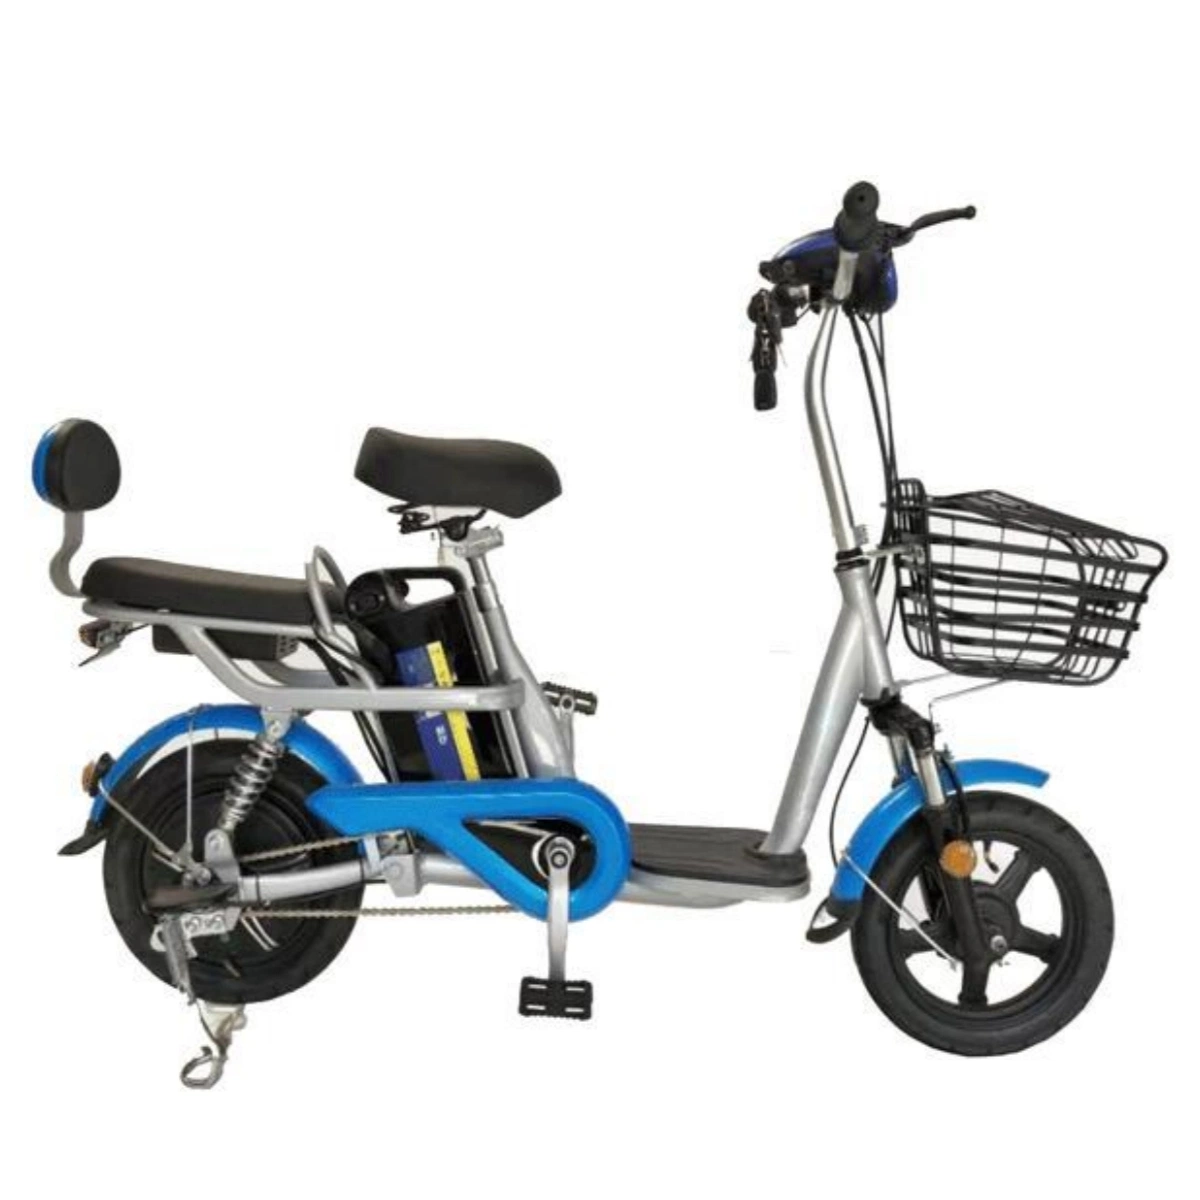 Popular 350W Brushless Motor Electric Bicycle Electric Bike